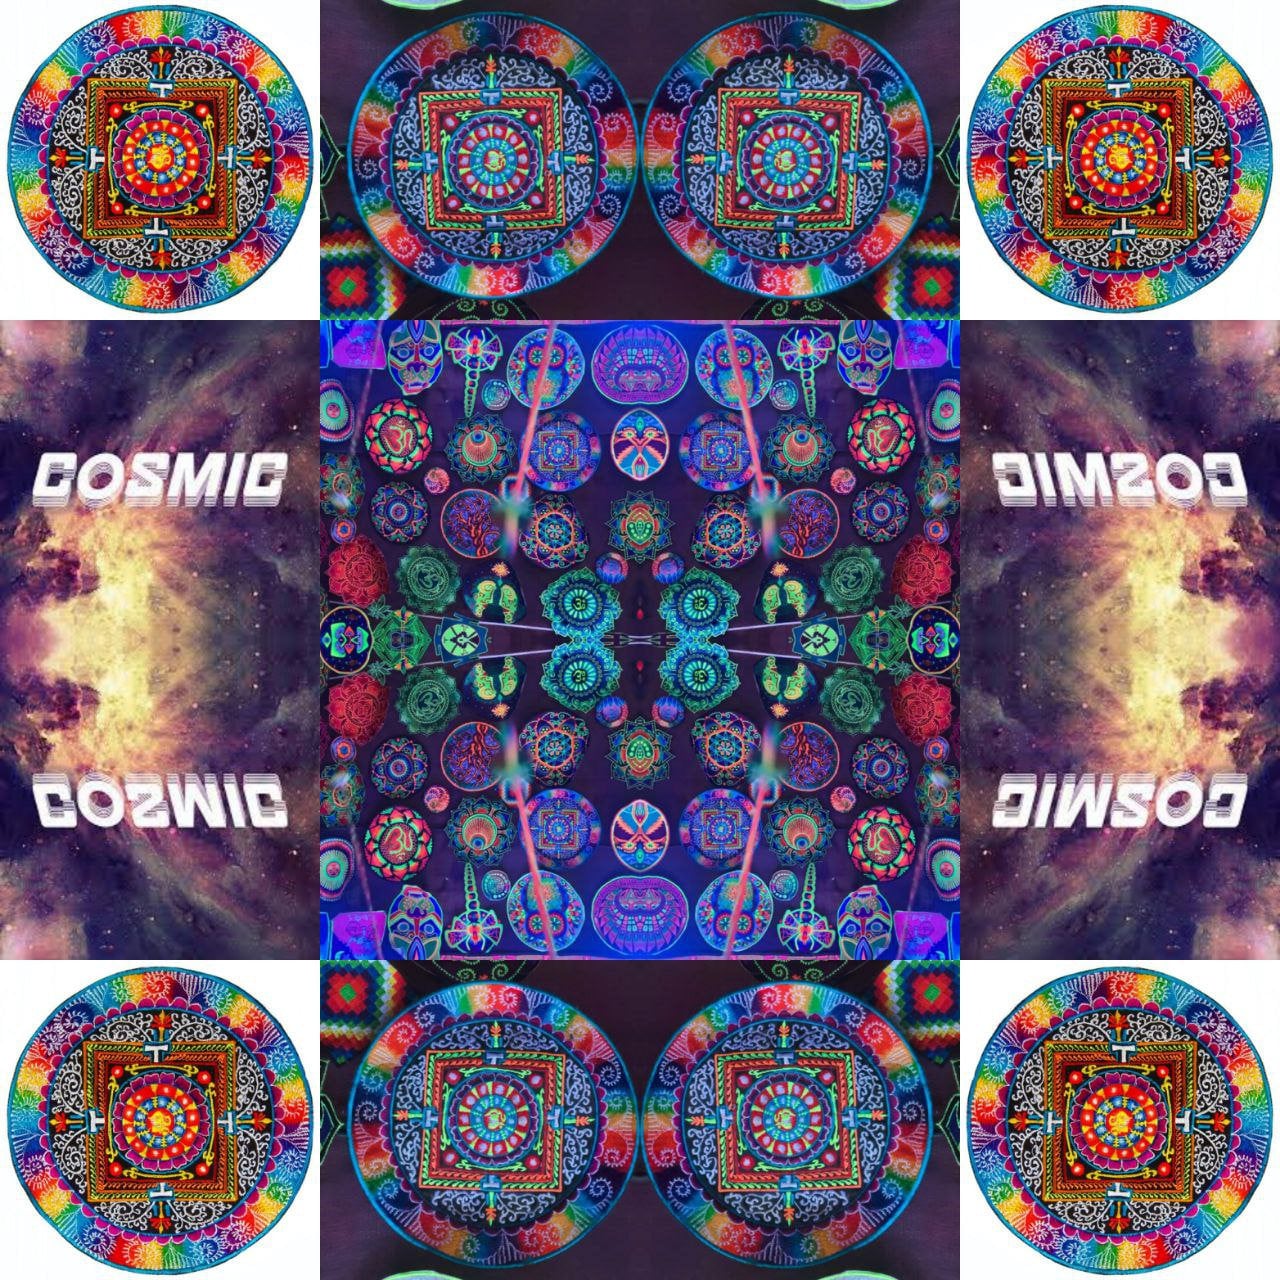 AUM Tankar Mandala Patch handmade Embroidery of Cosmic Music Goa Trance psychedelic Tankar blacklight glowing masterpiece Psytrance Art OM